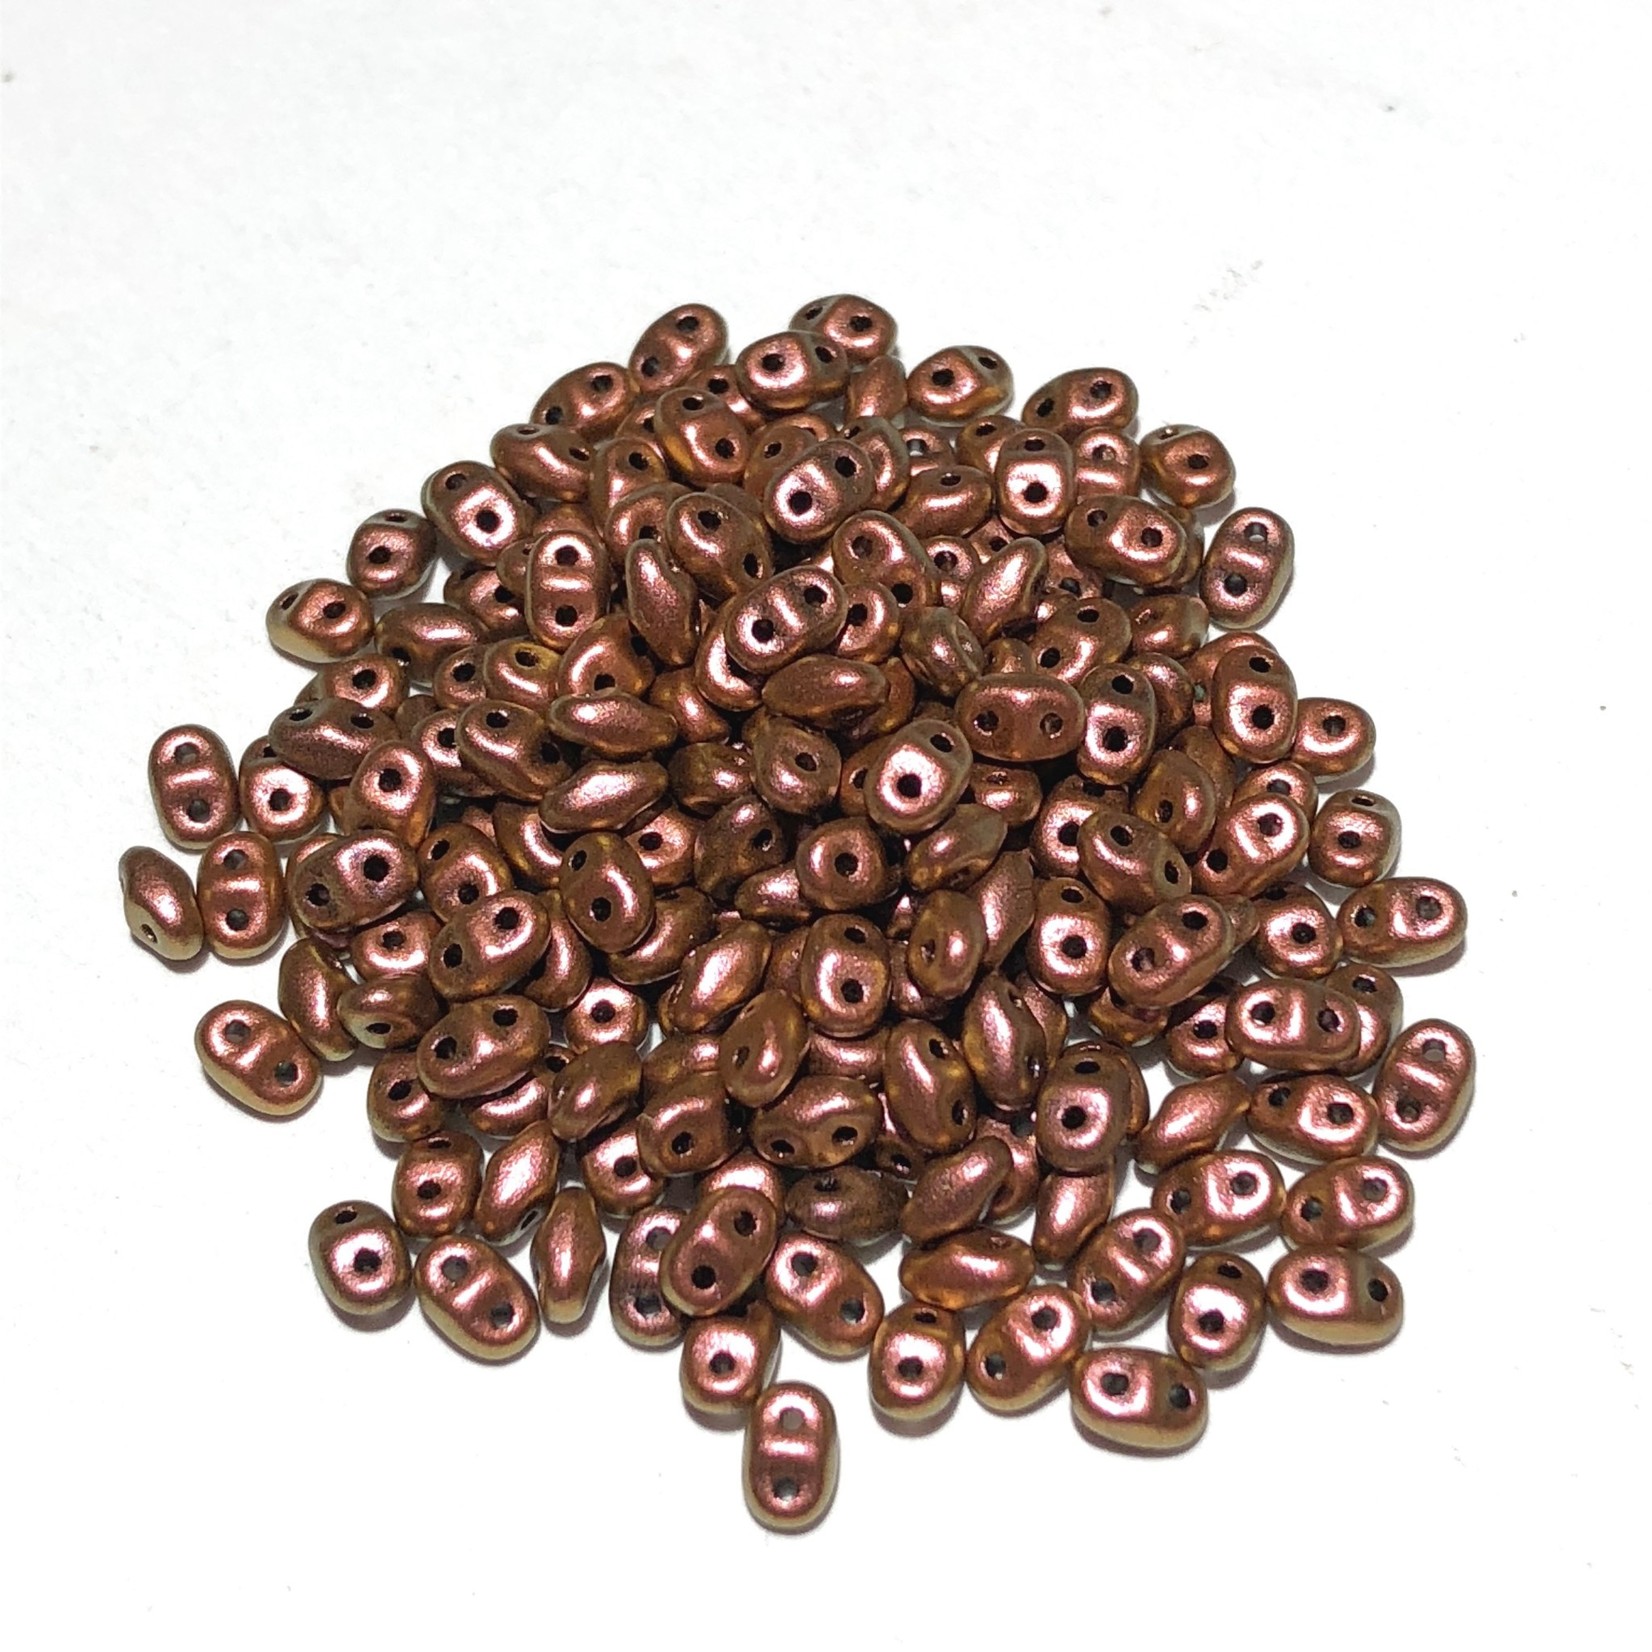 MiniDuo Polychrome Copper Rose 15g Tube